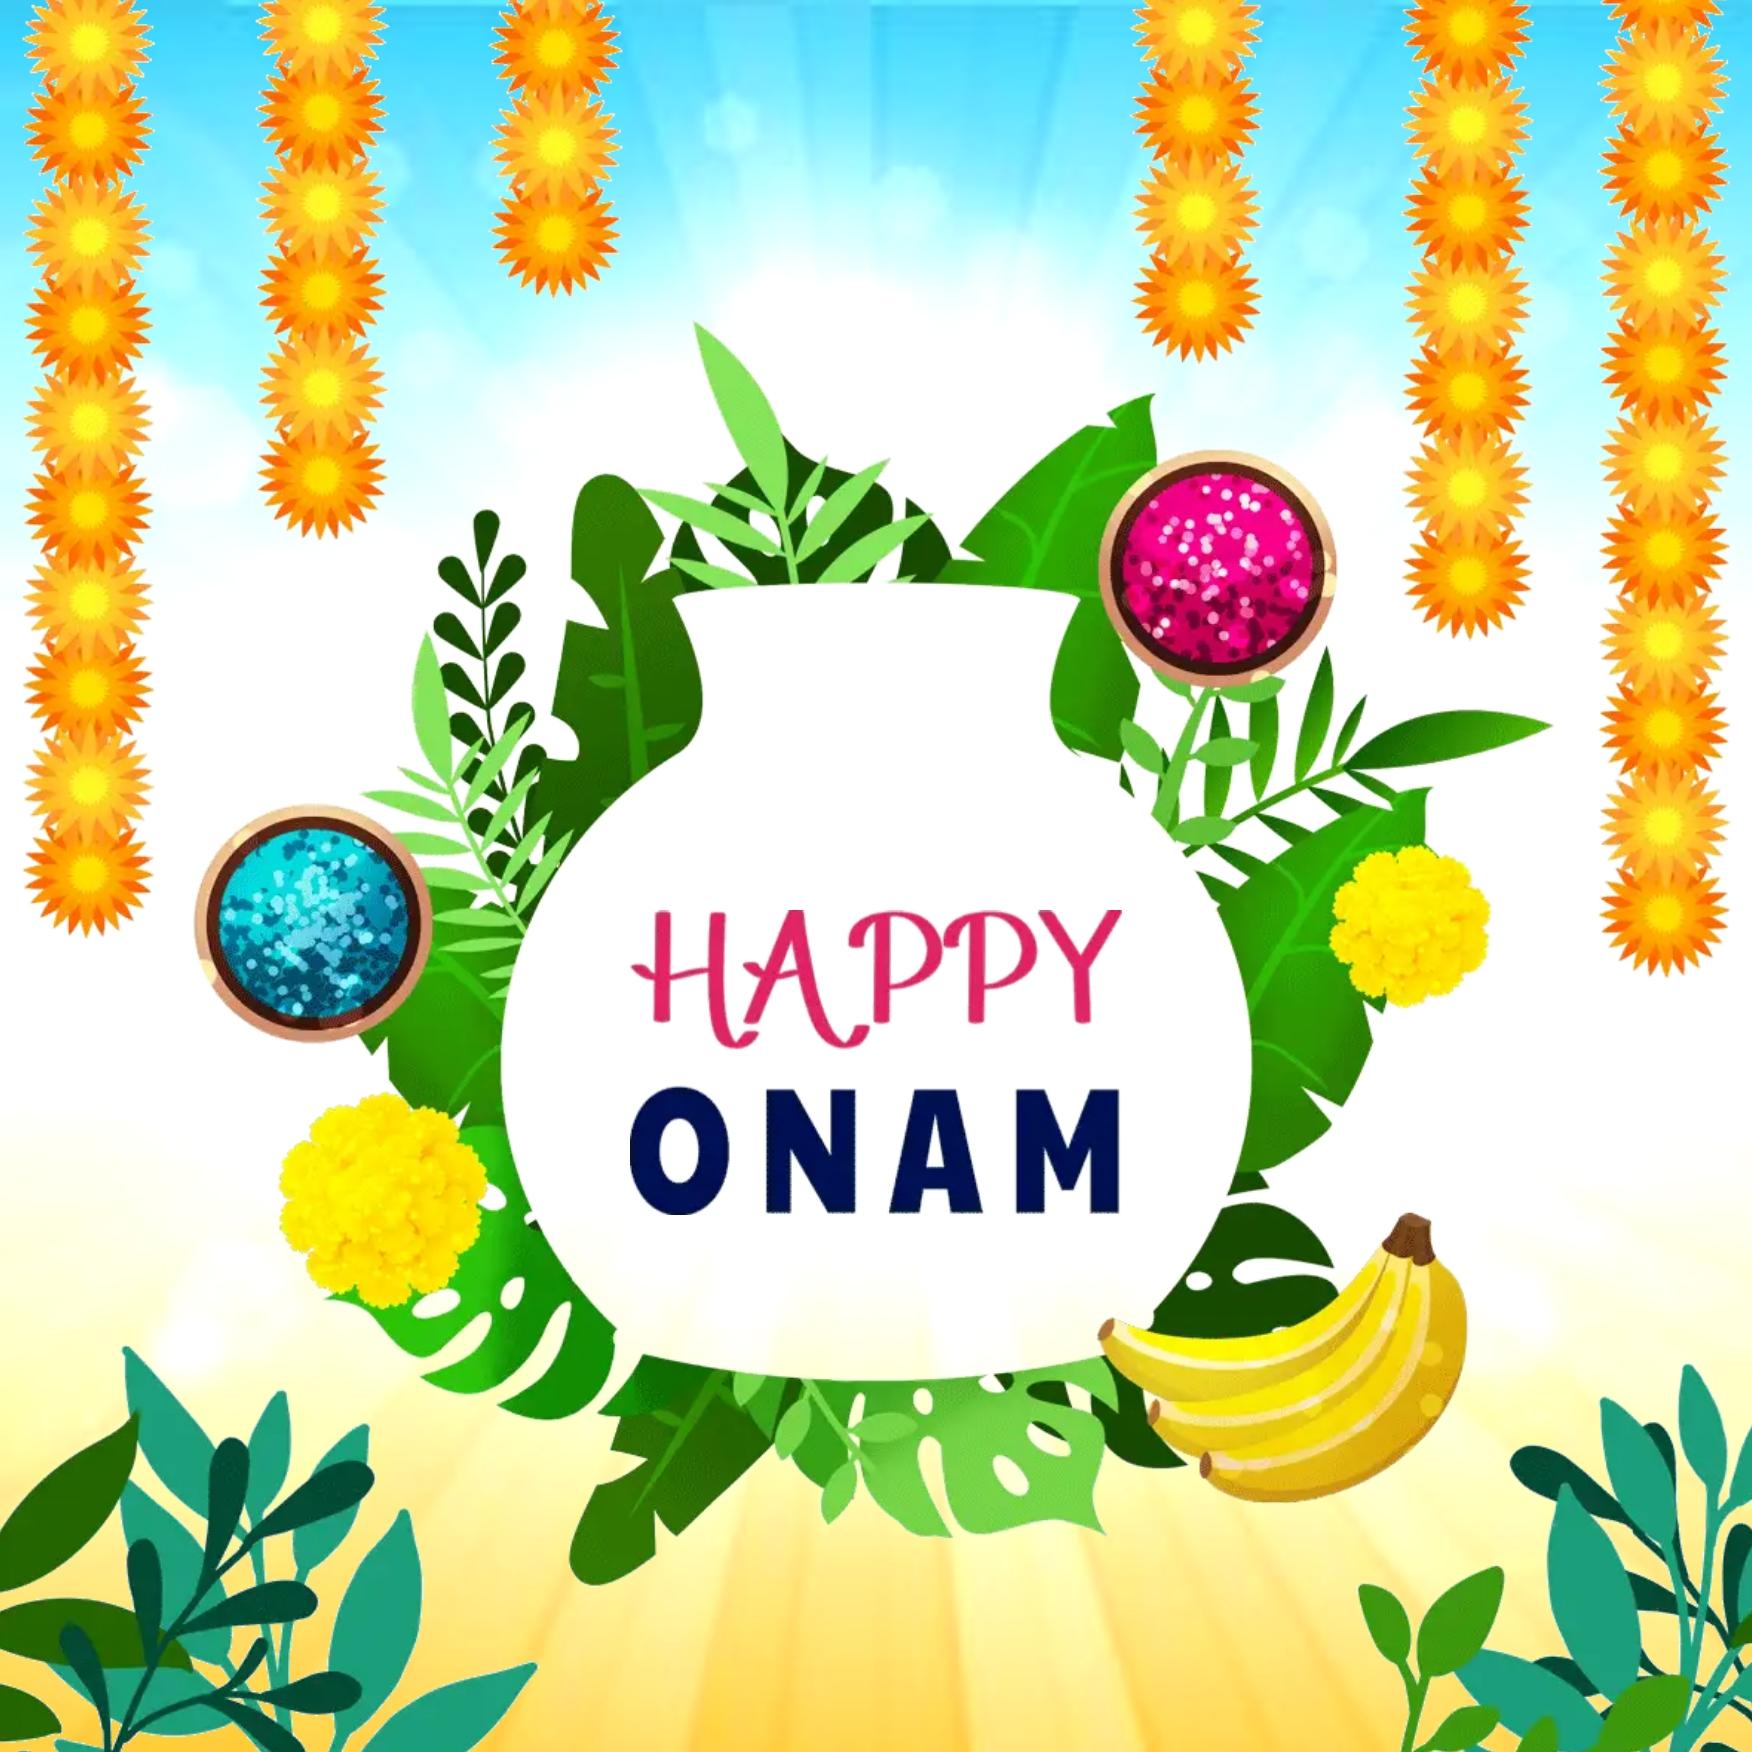 Happy Onam Images Hd